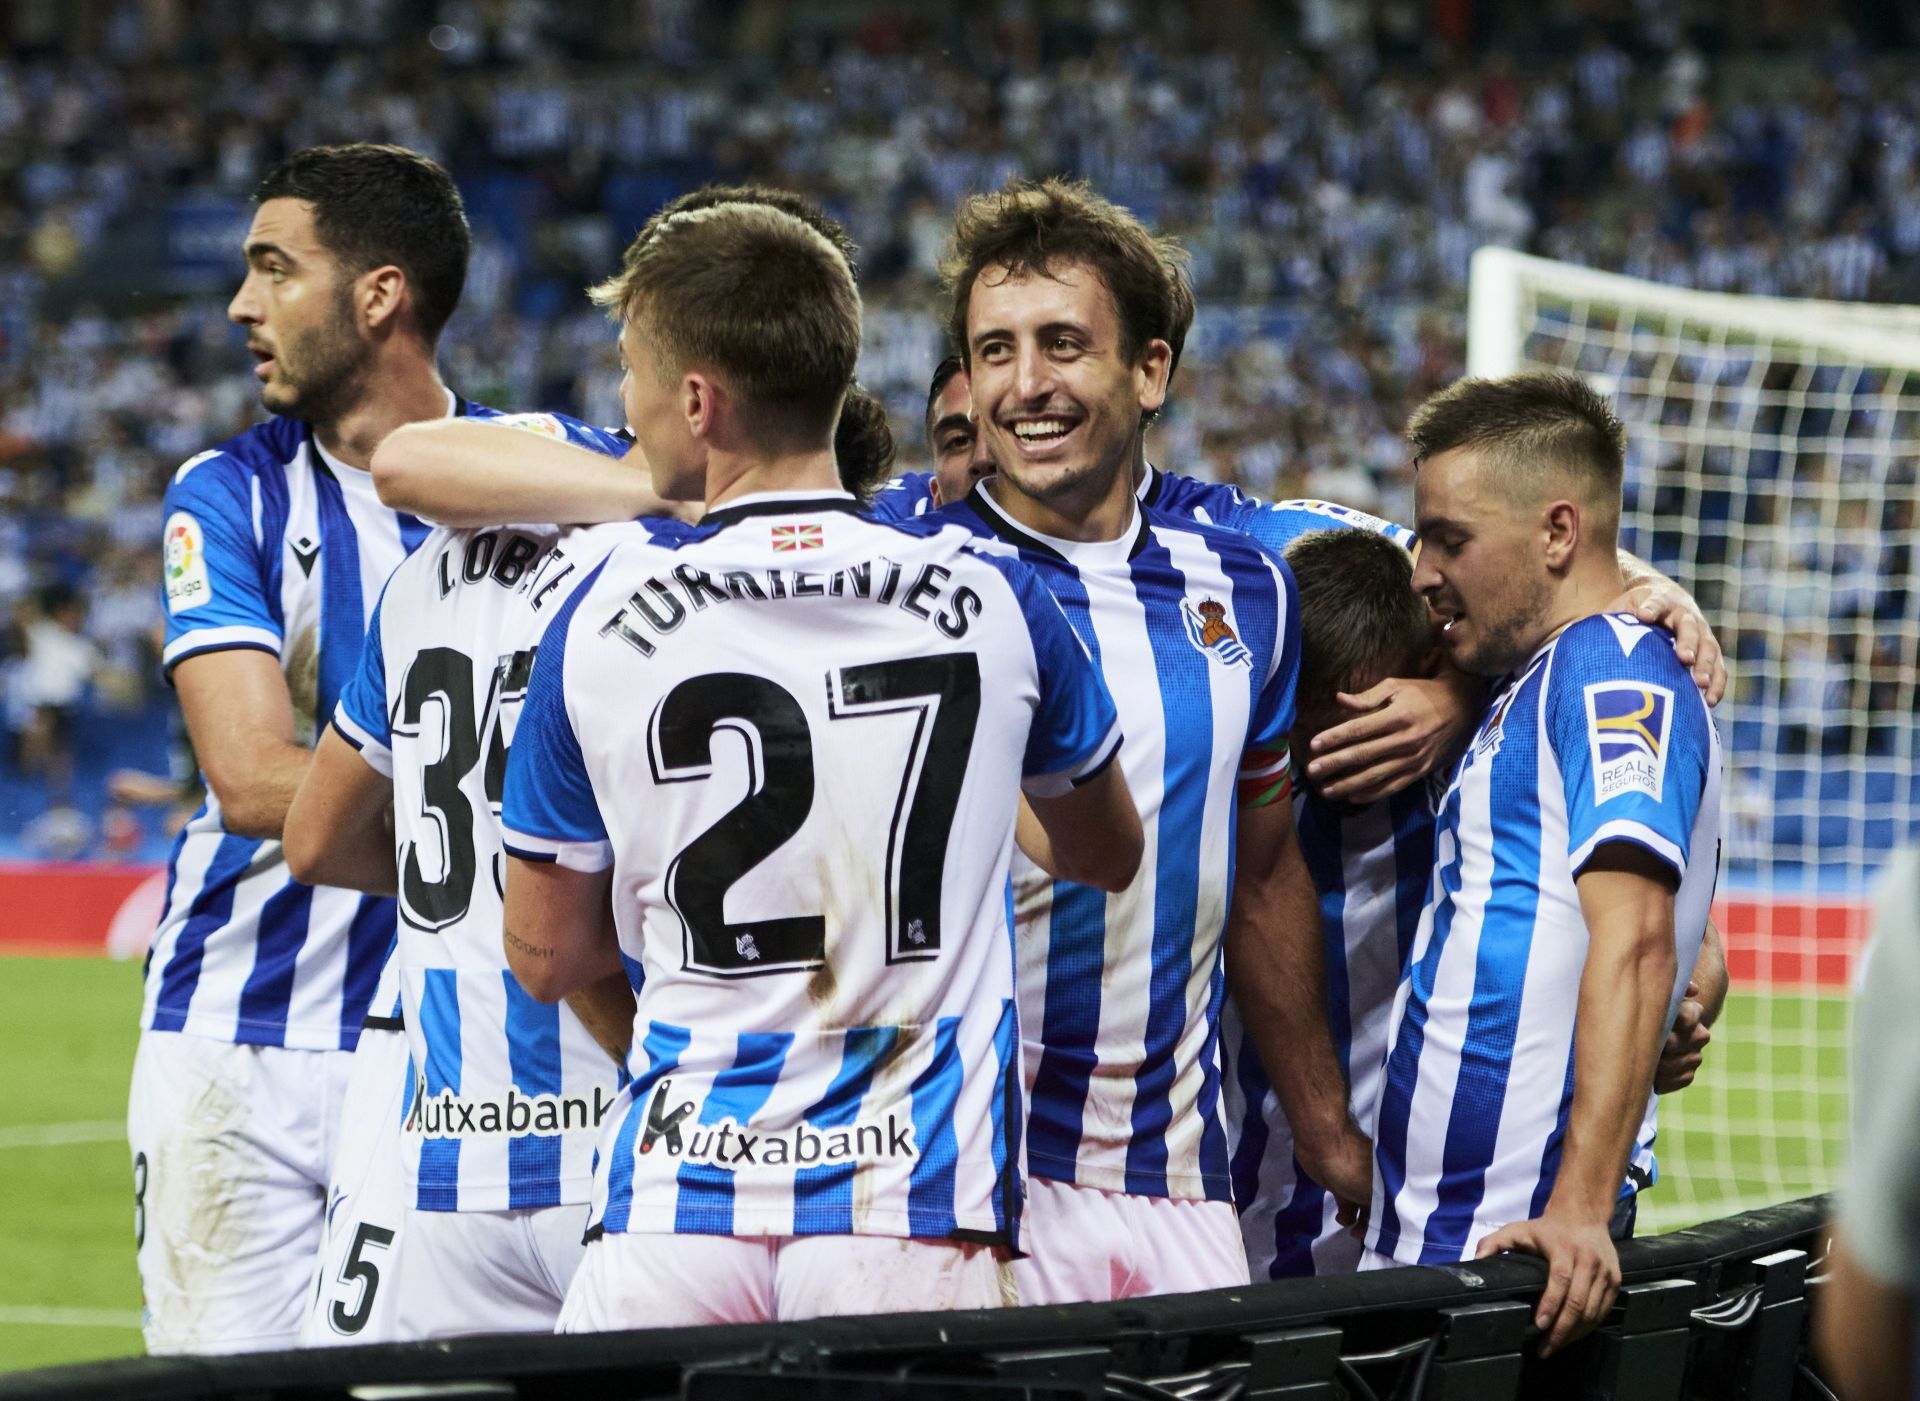 Real Sociedad play Celta Vigo on Thursday